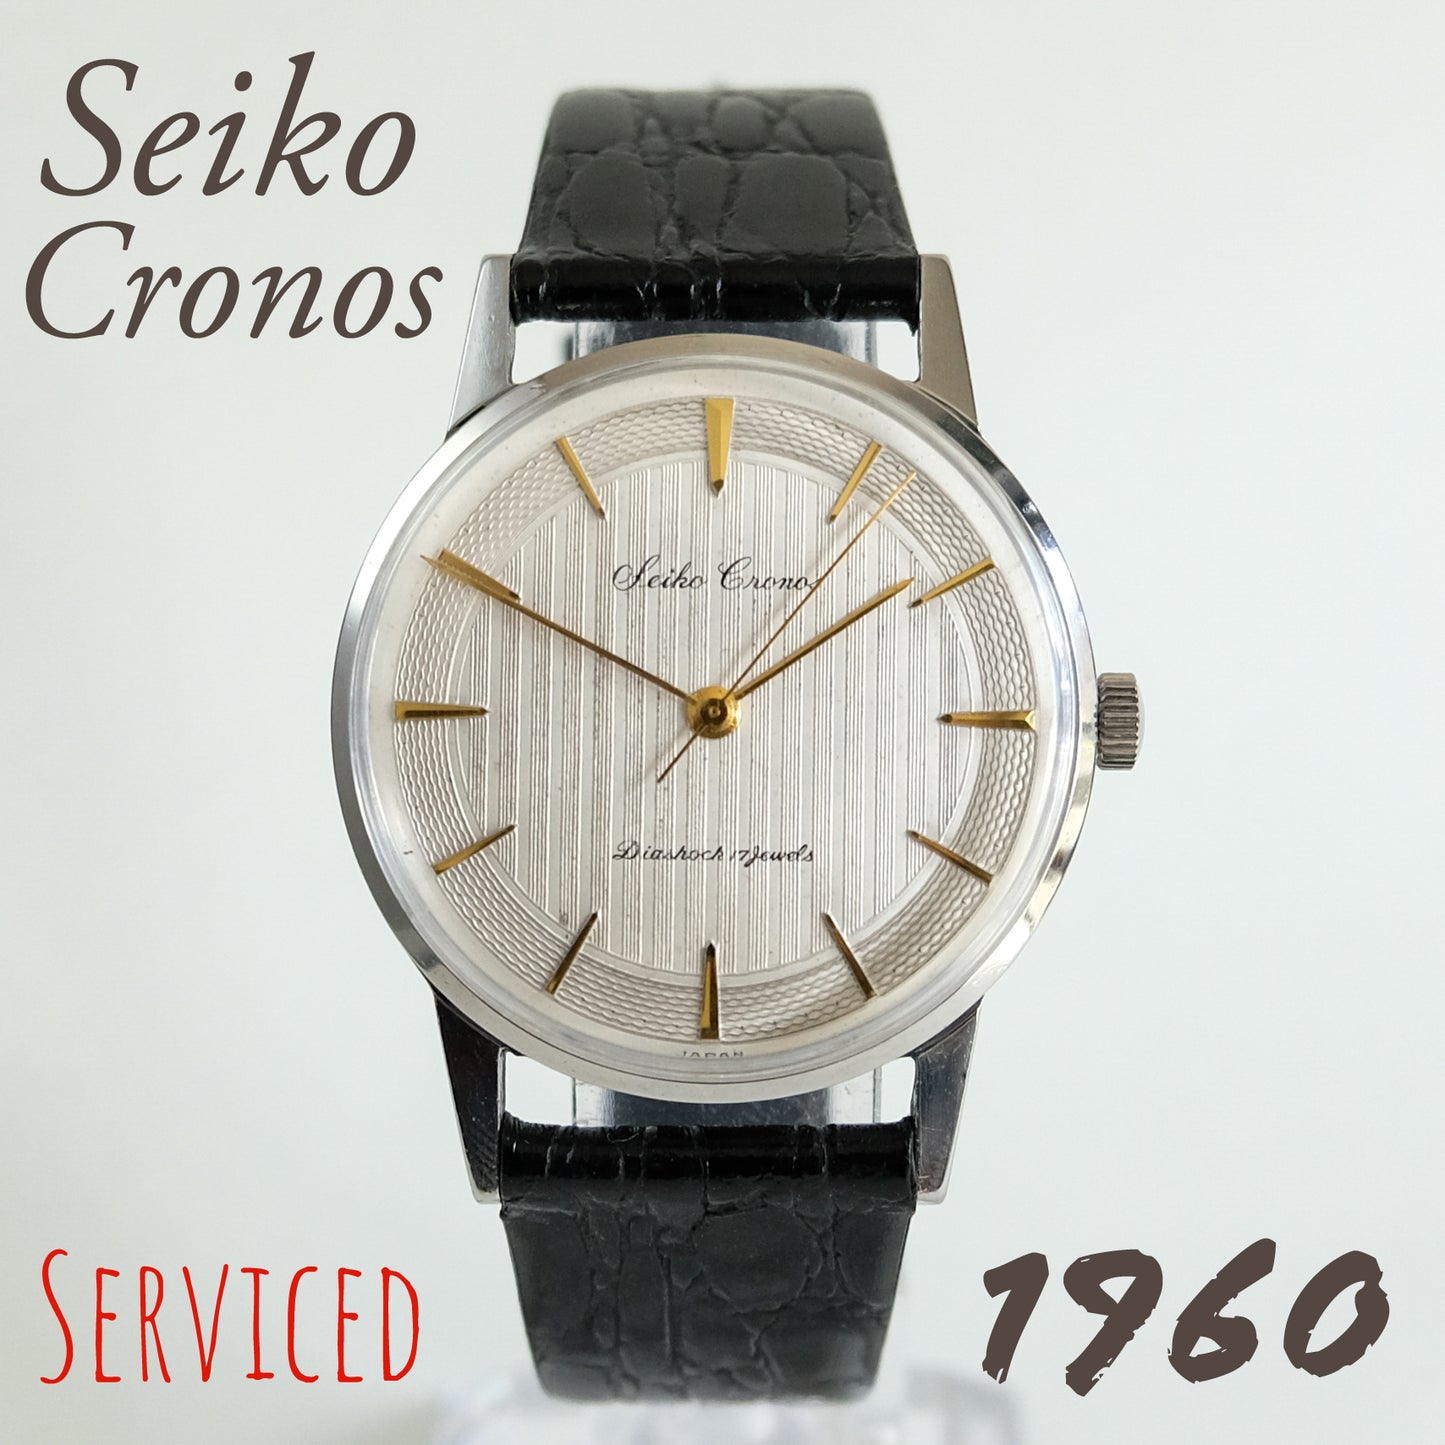 1960 Seiko Cronos 15001A